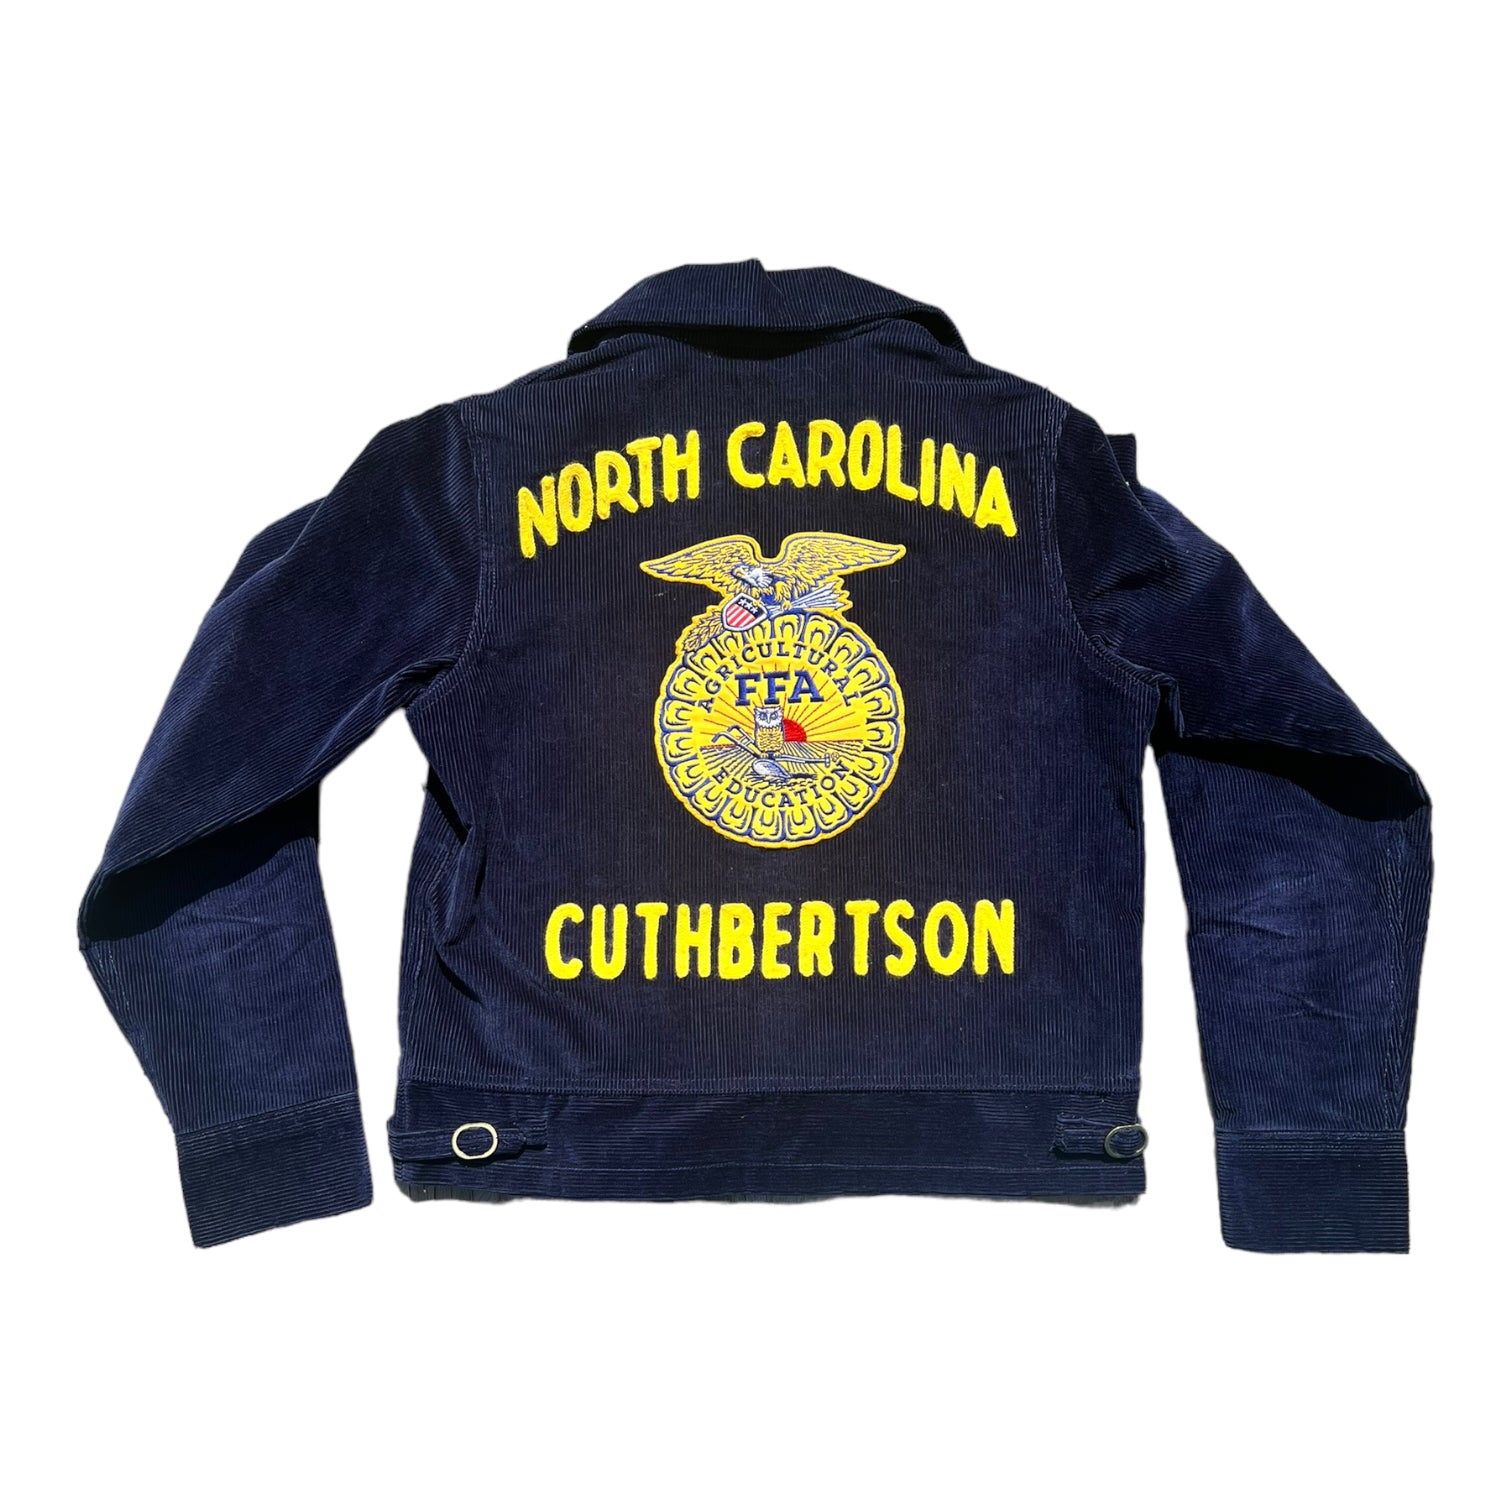 North Carolina Cuthbertson FFA CorduroyJacket (S)